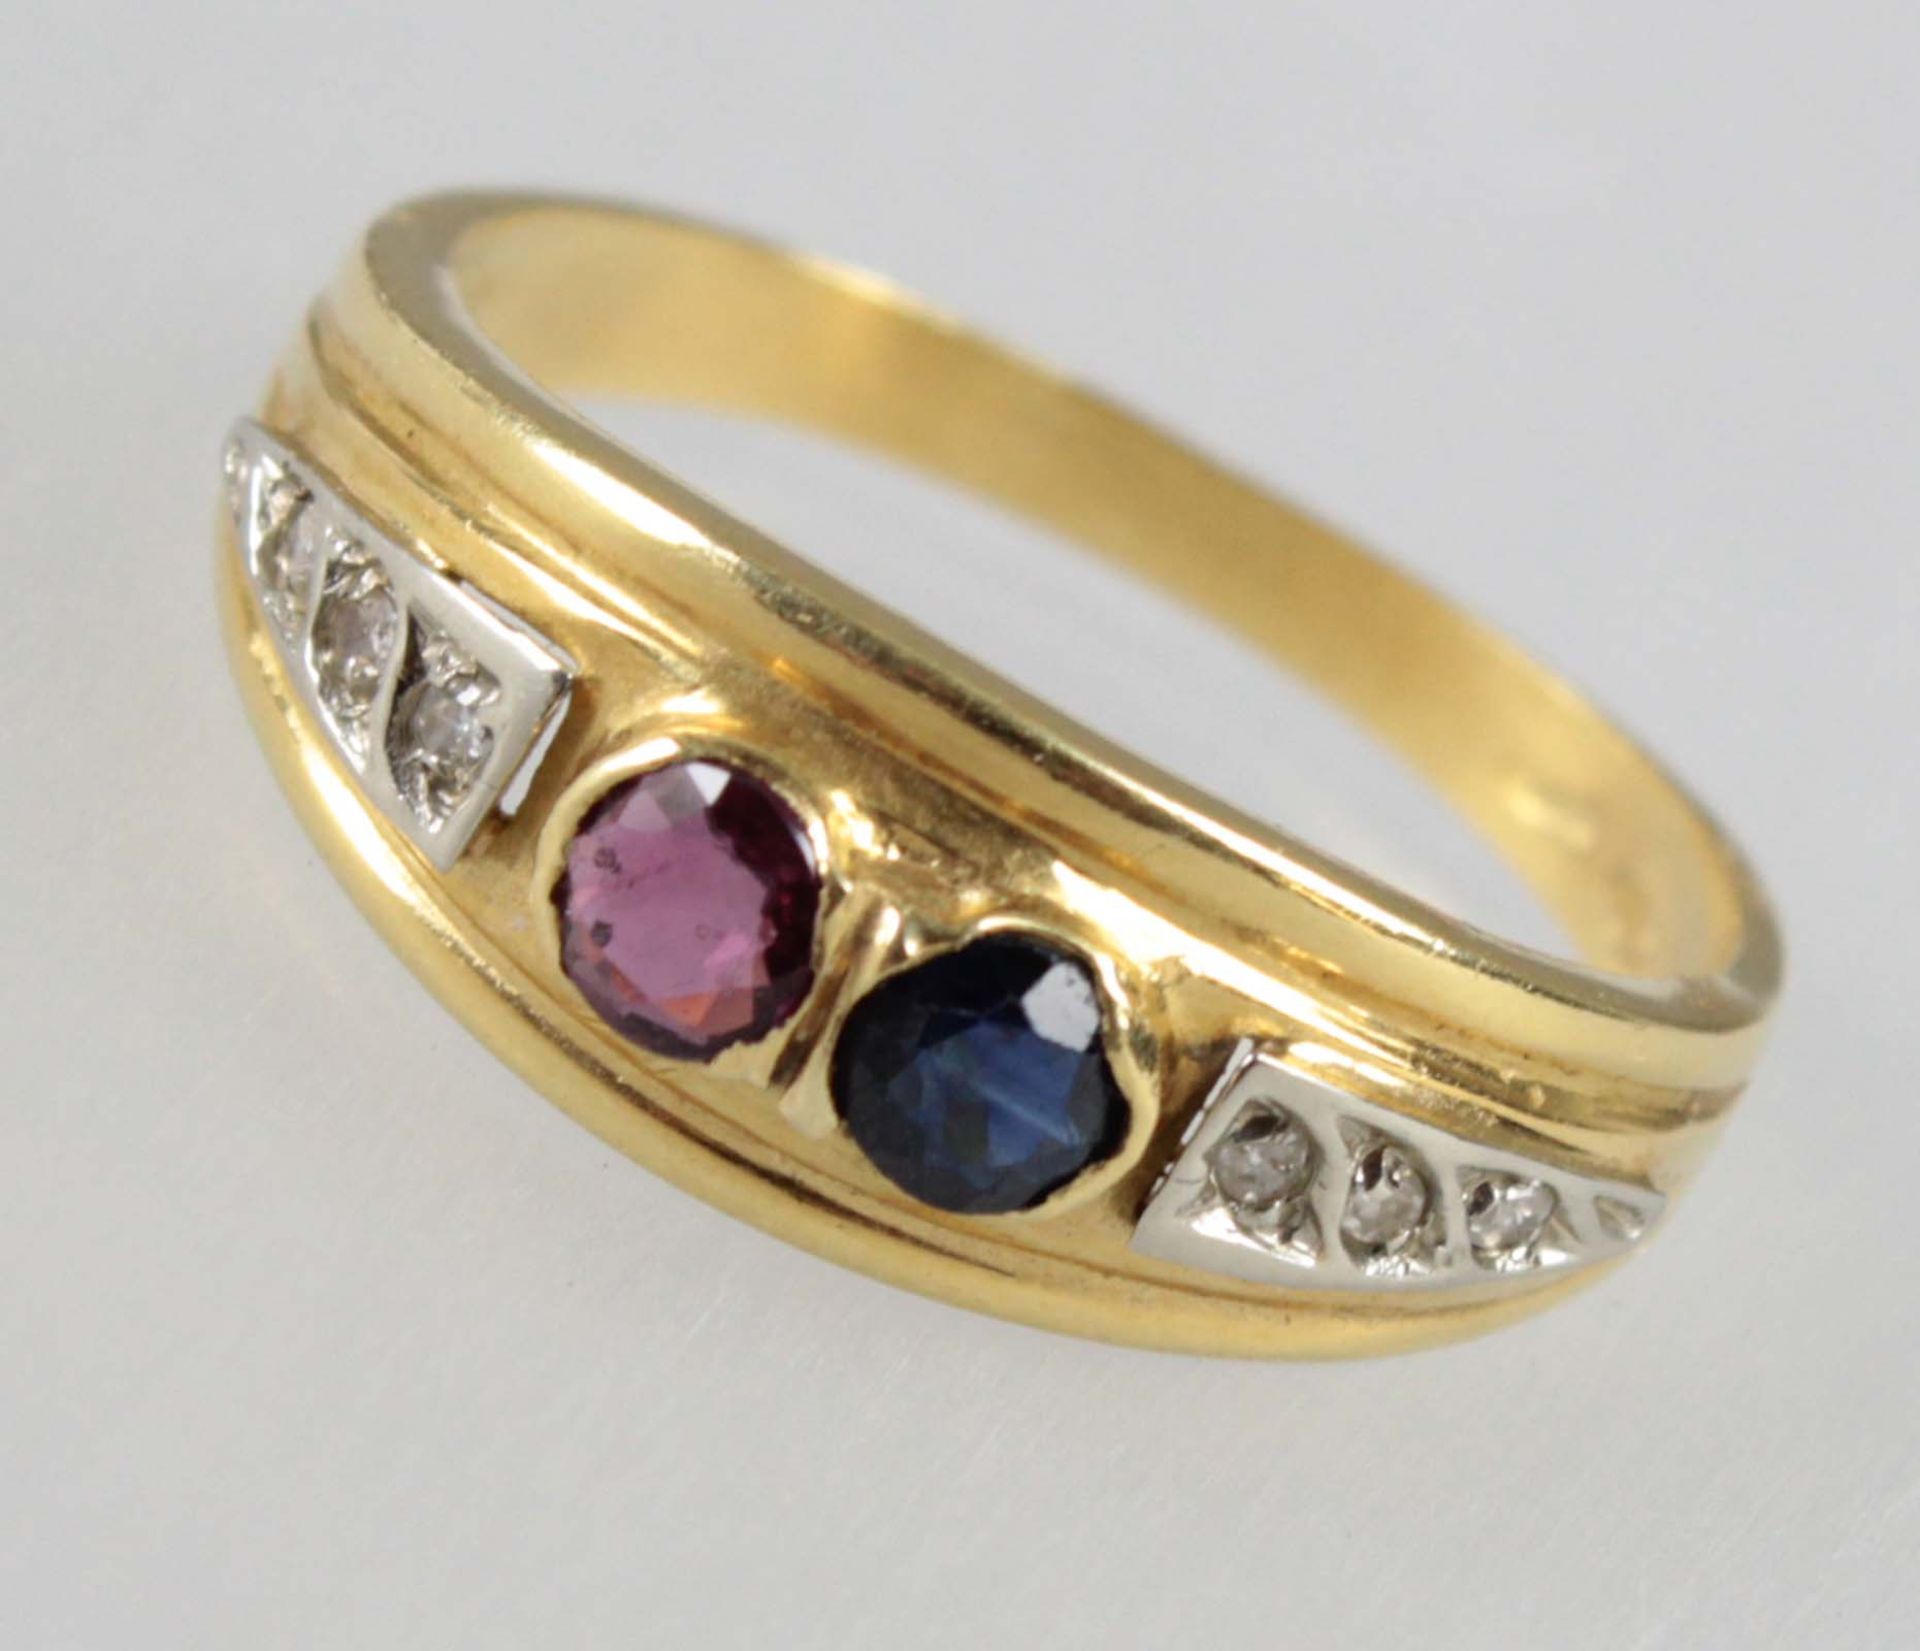 Saphir Rubin Ring mit Brillanten - GG 750